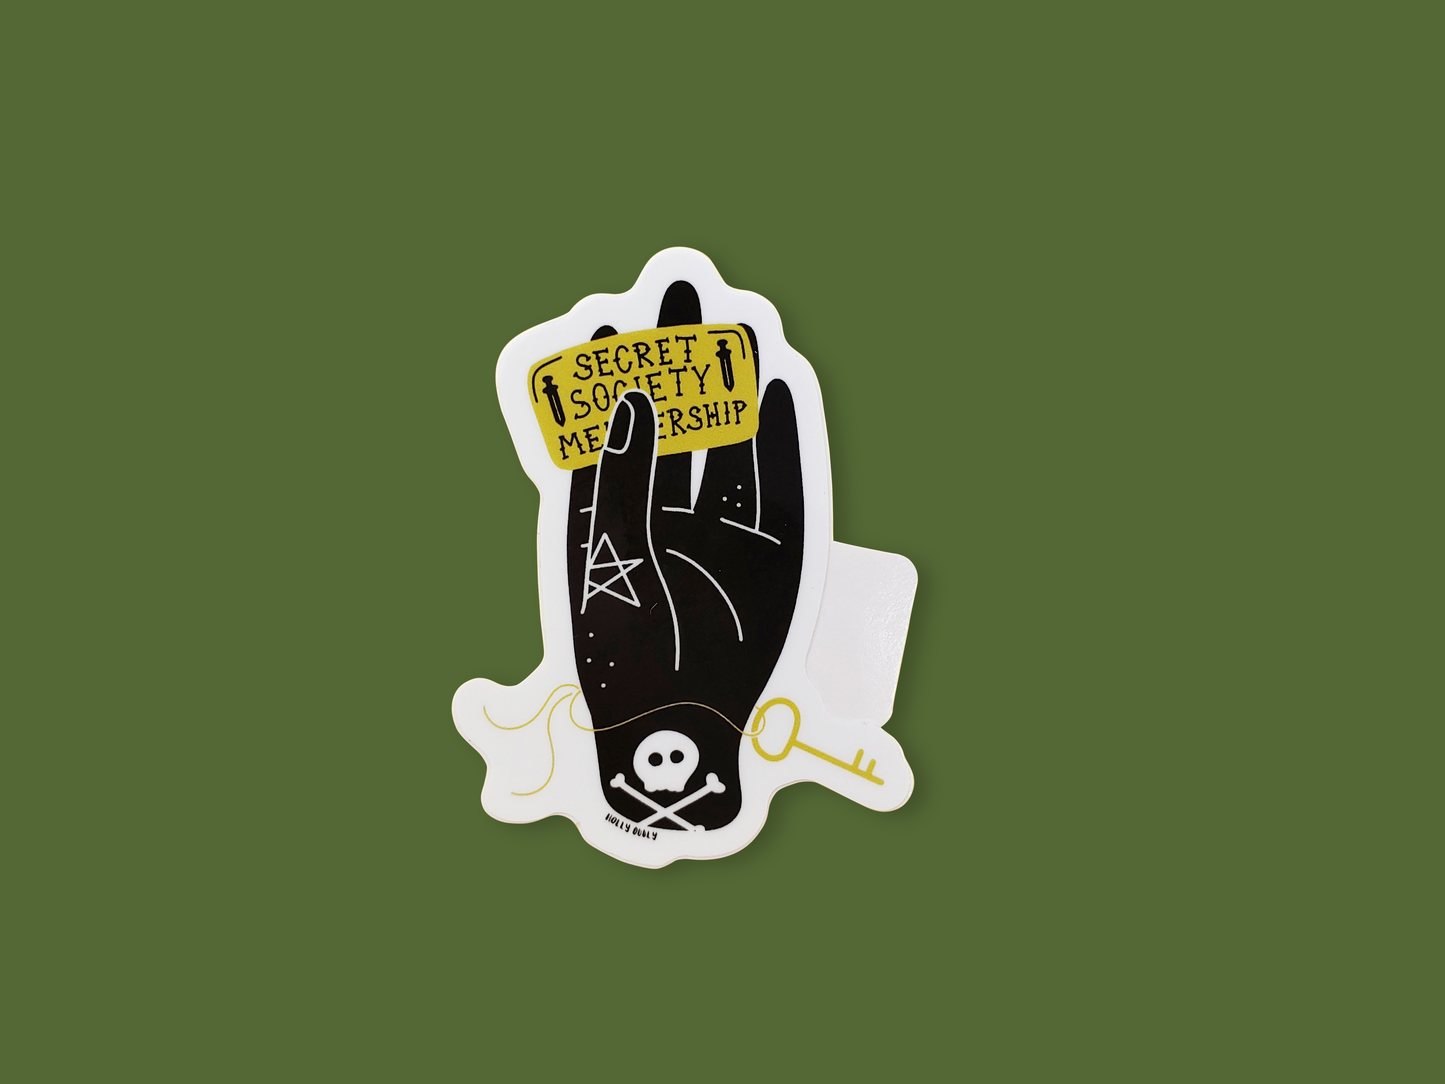 Hand and Secret Society Membership Sticker